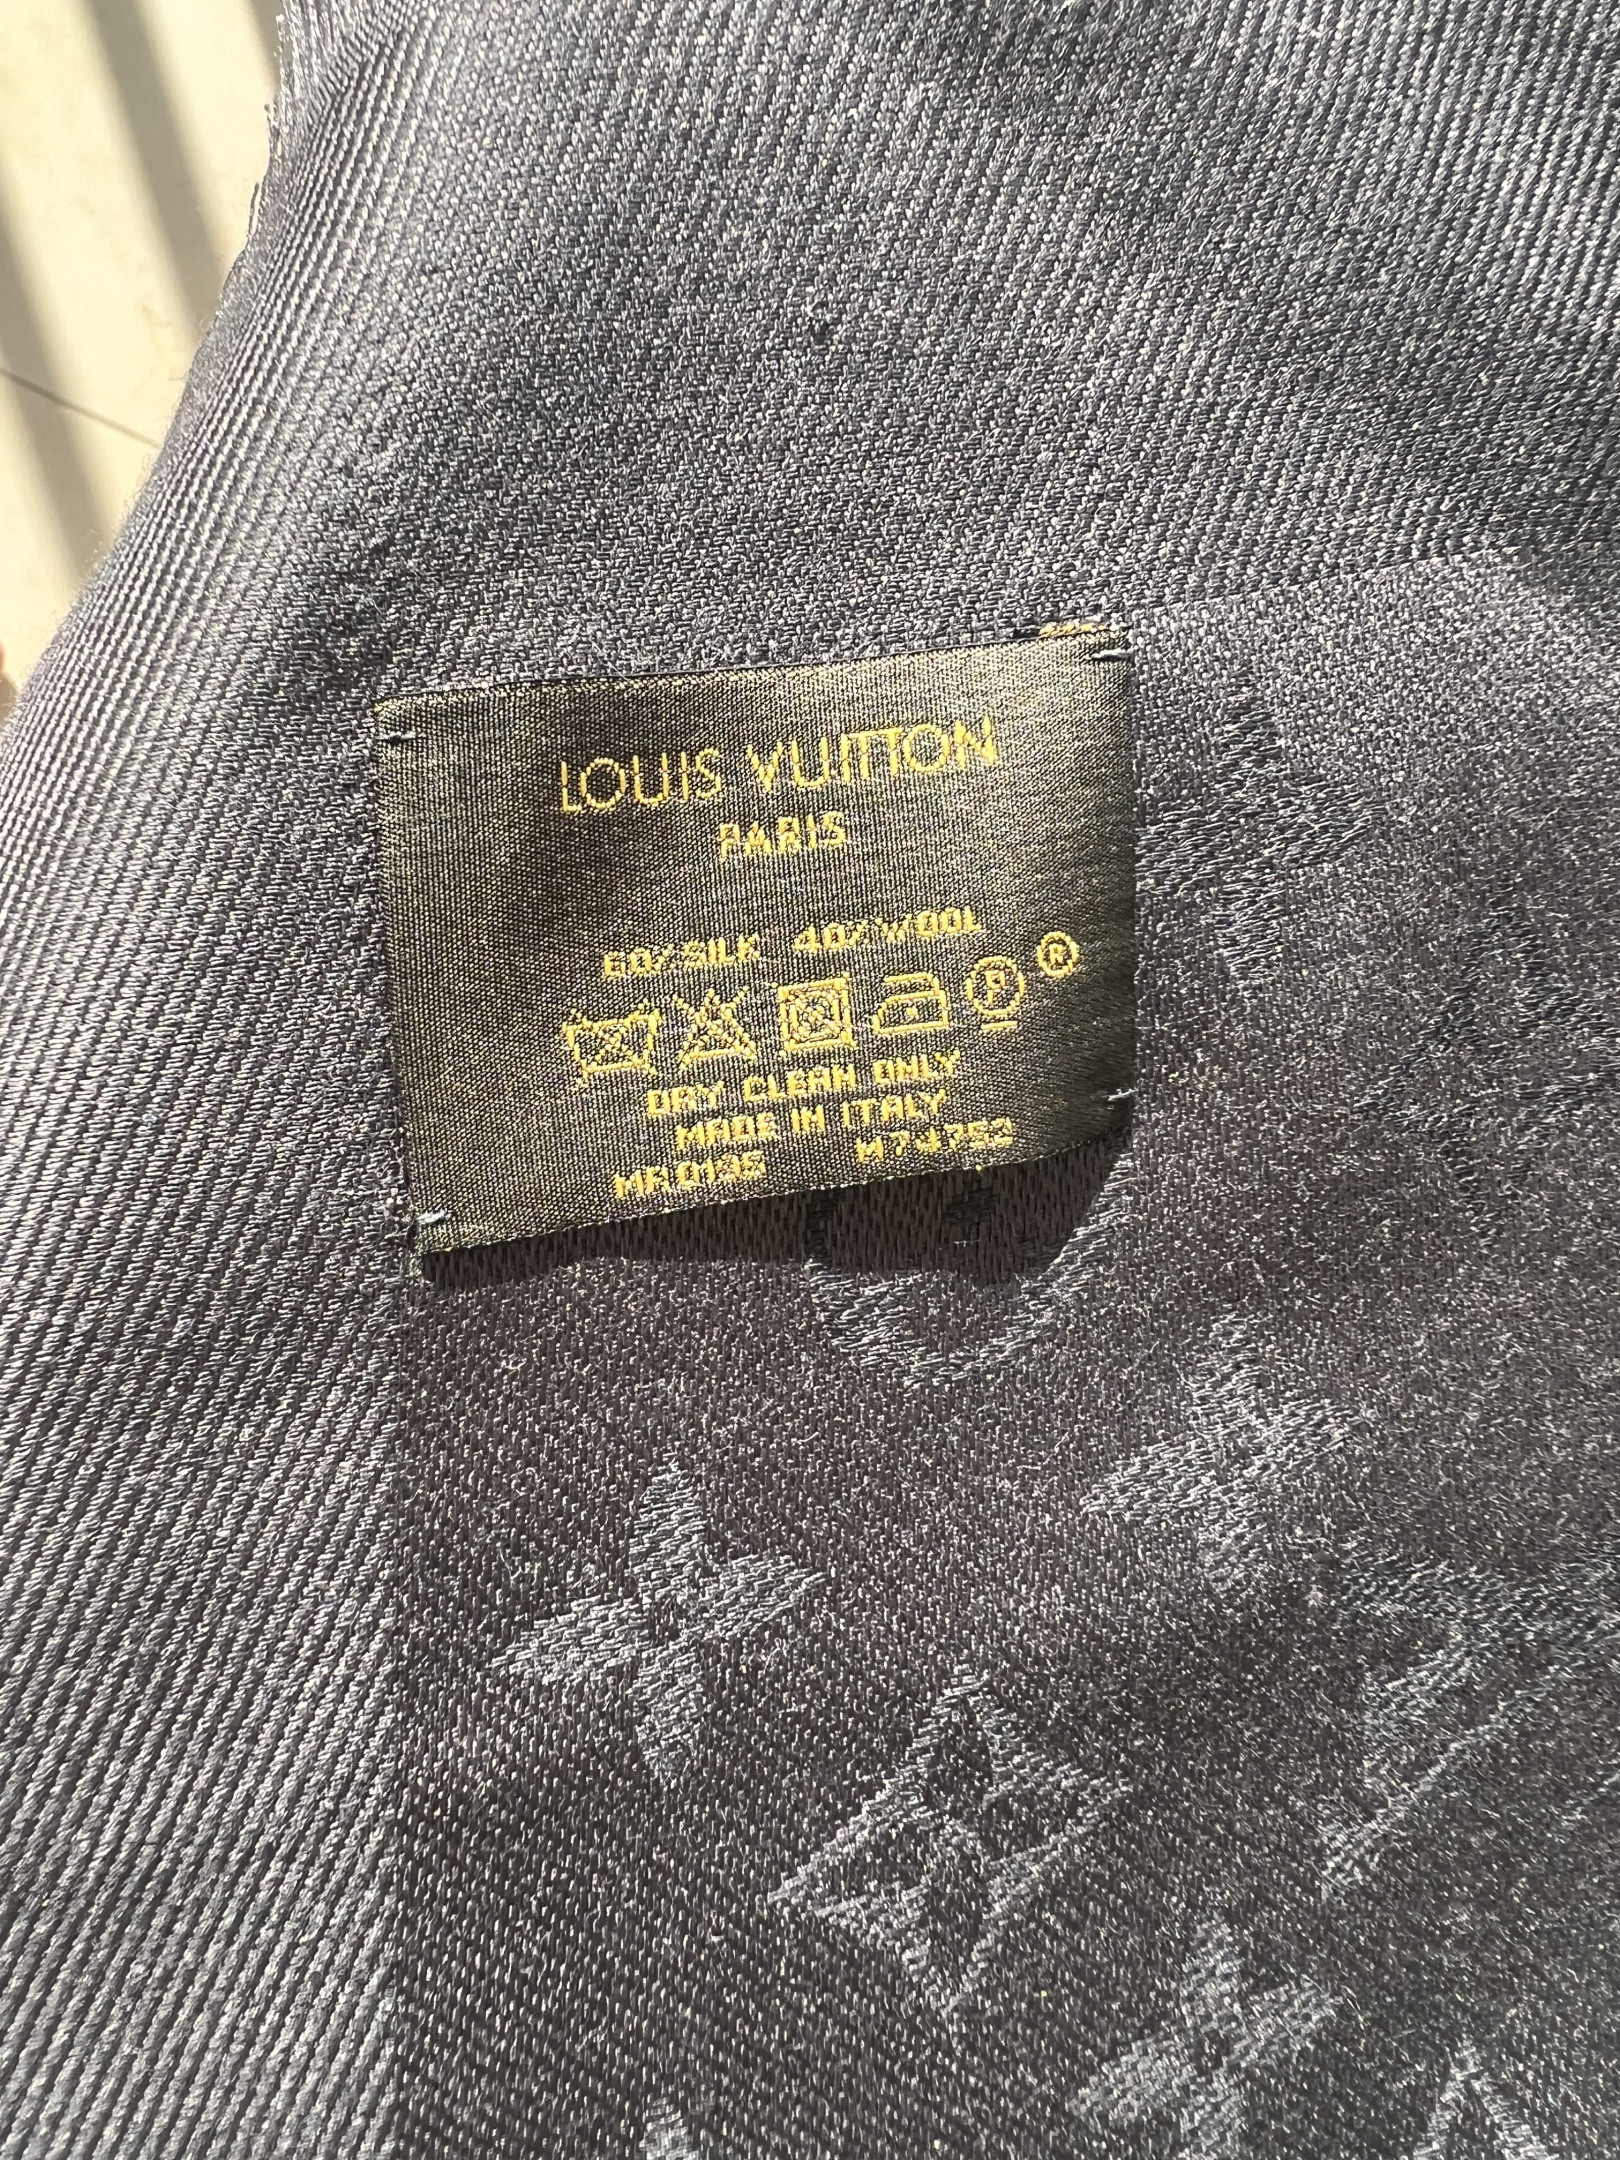 Louis Vuitton scarf - Clozen